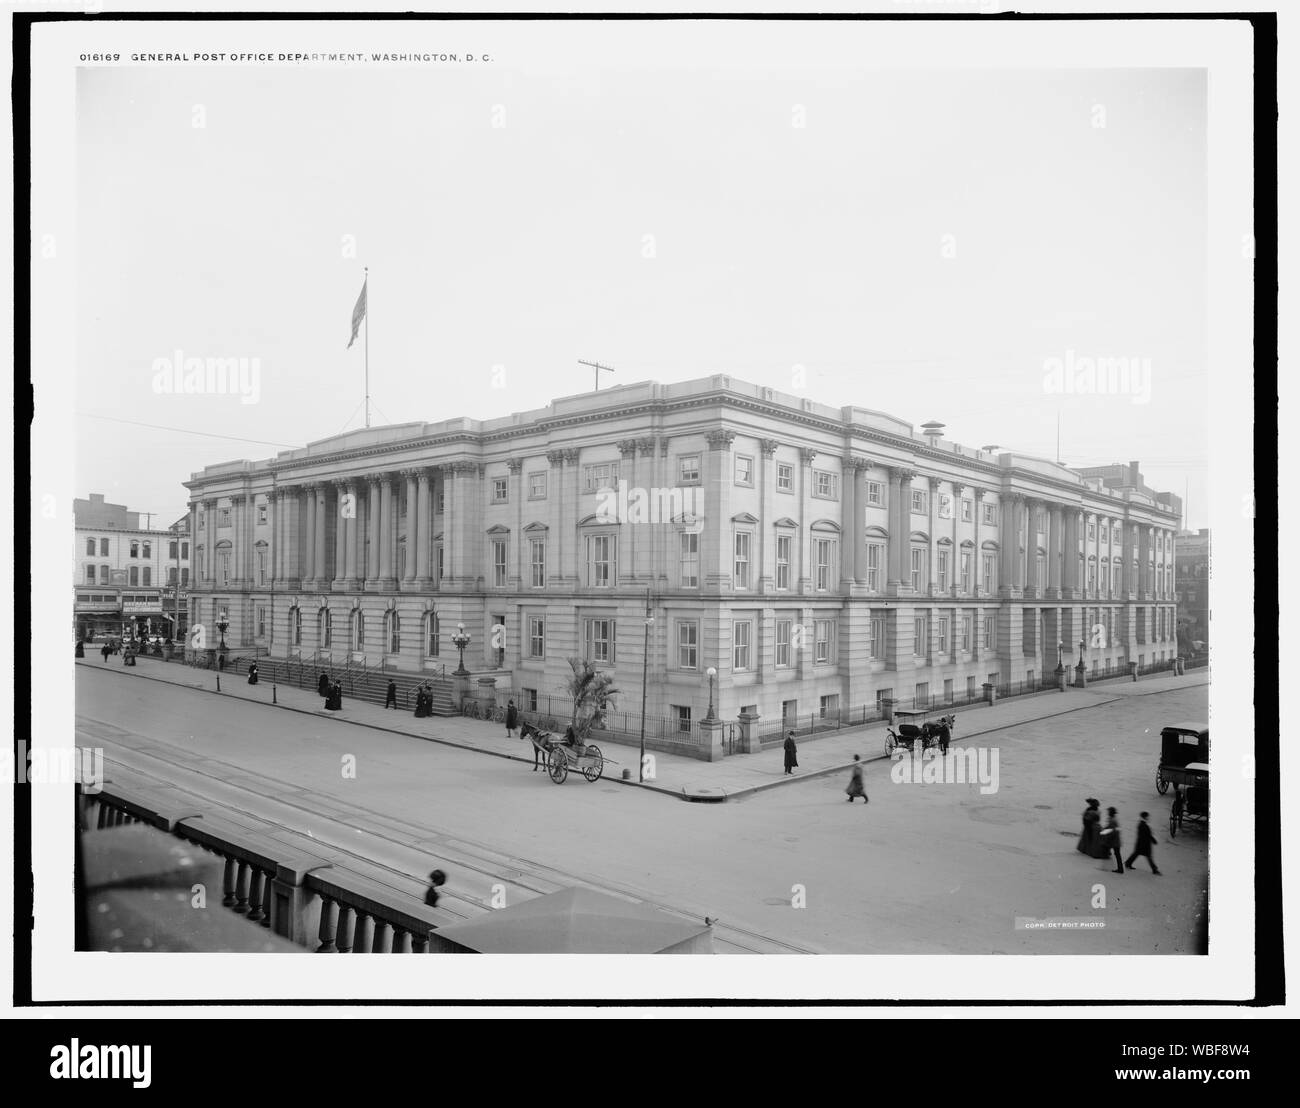 General Post Office department, Washington, D.C.; English: General Post Office department, Washington, D.C.. Stock Photo